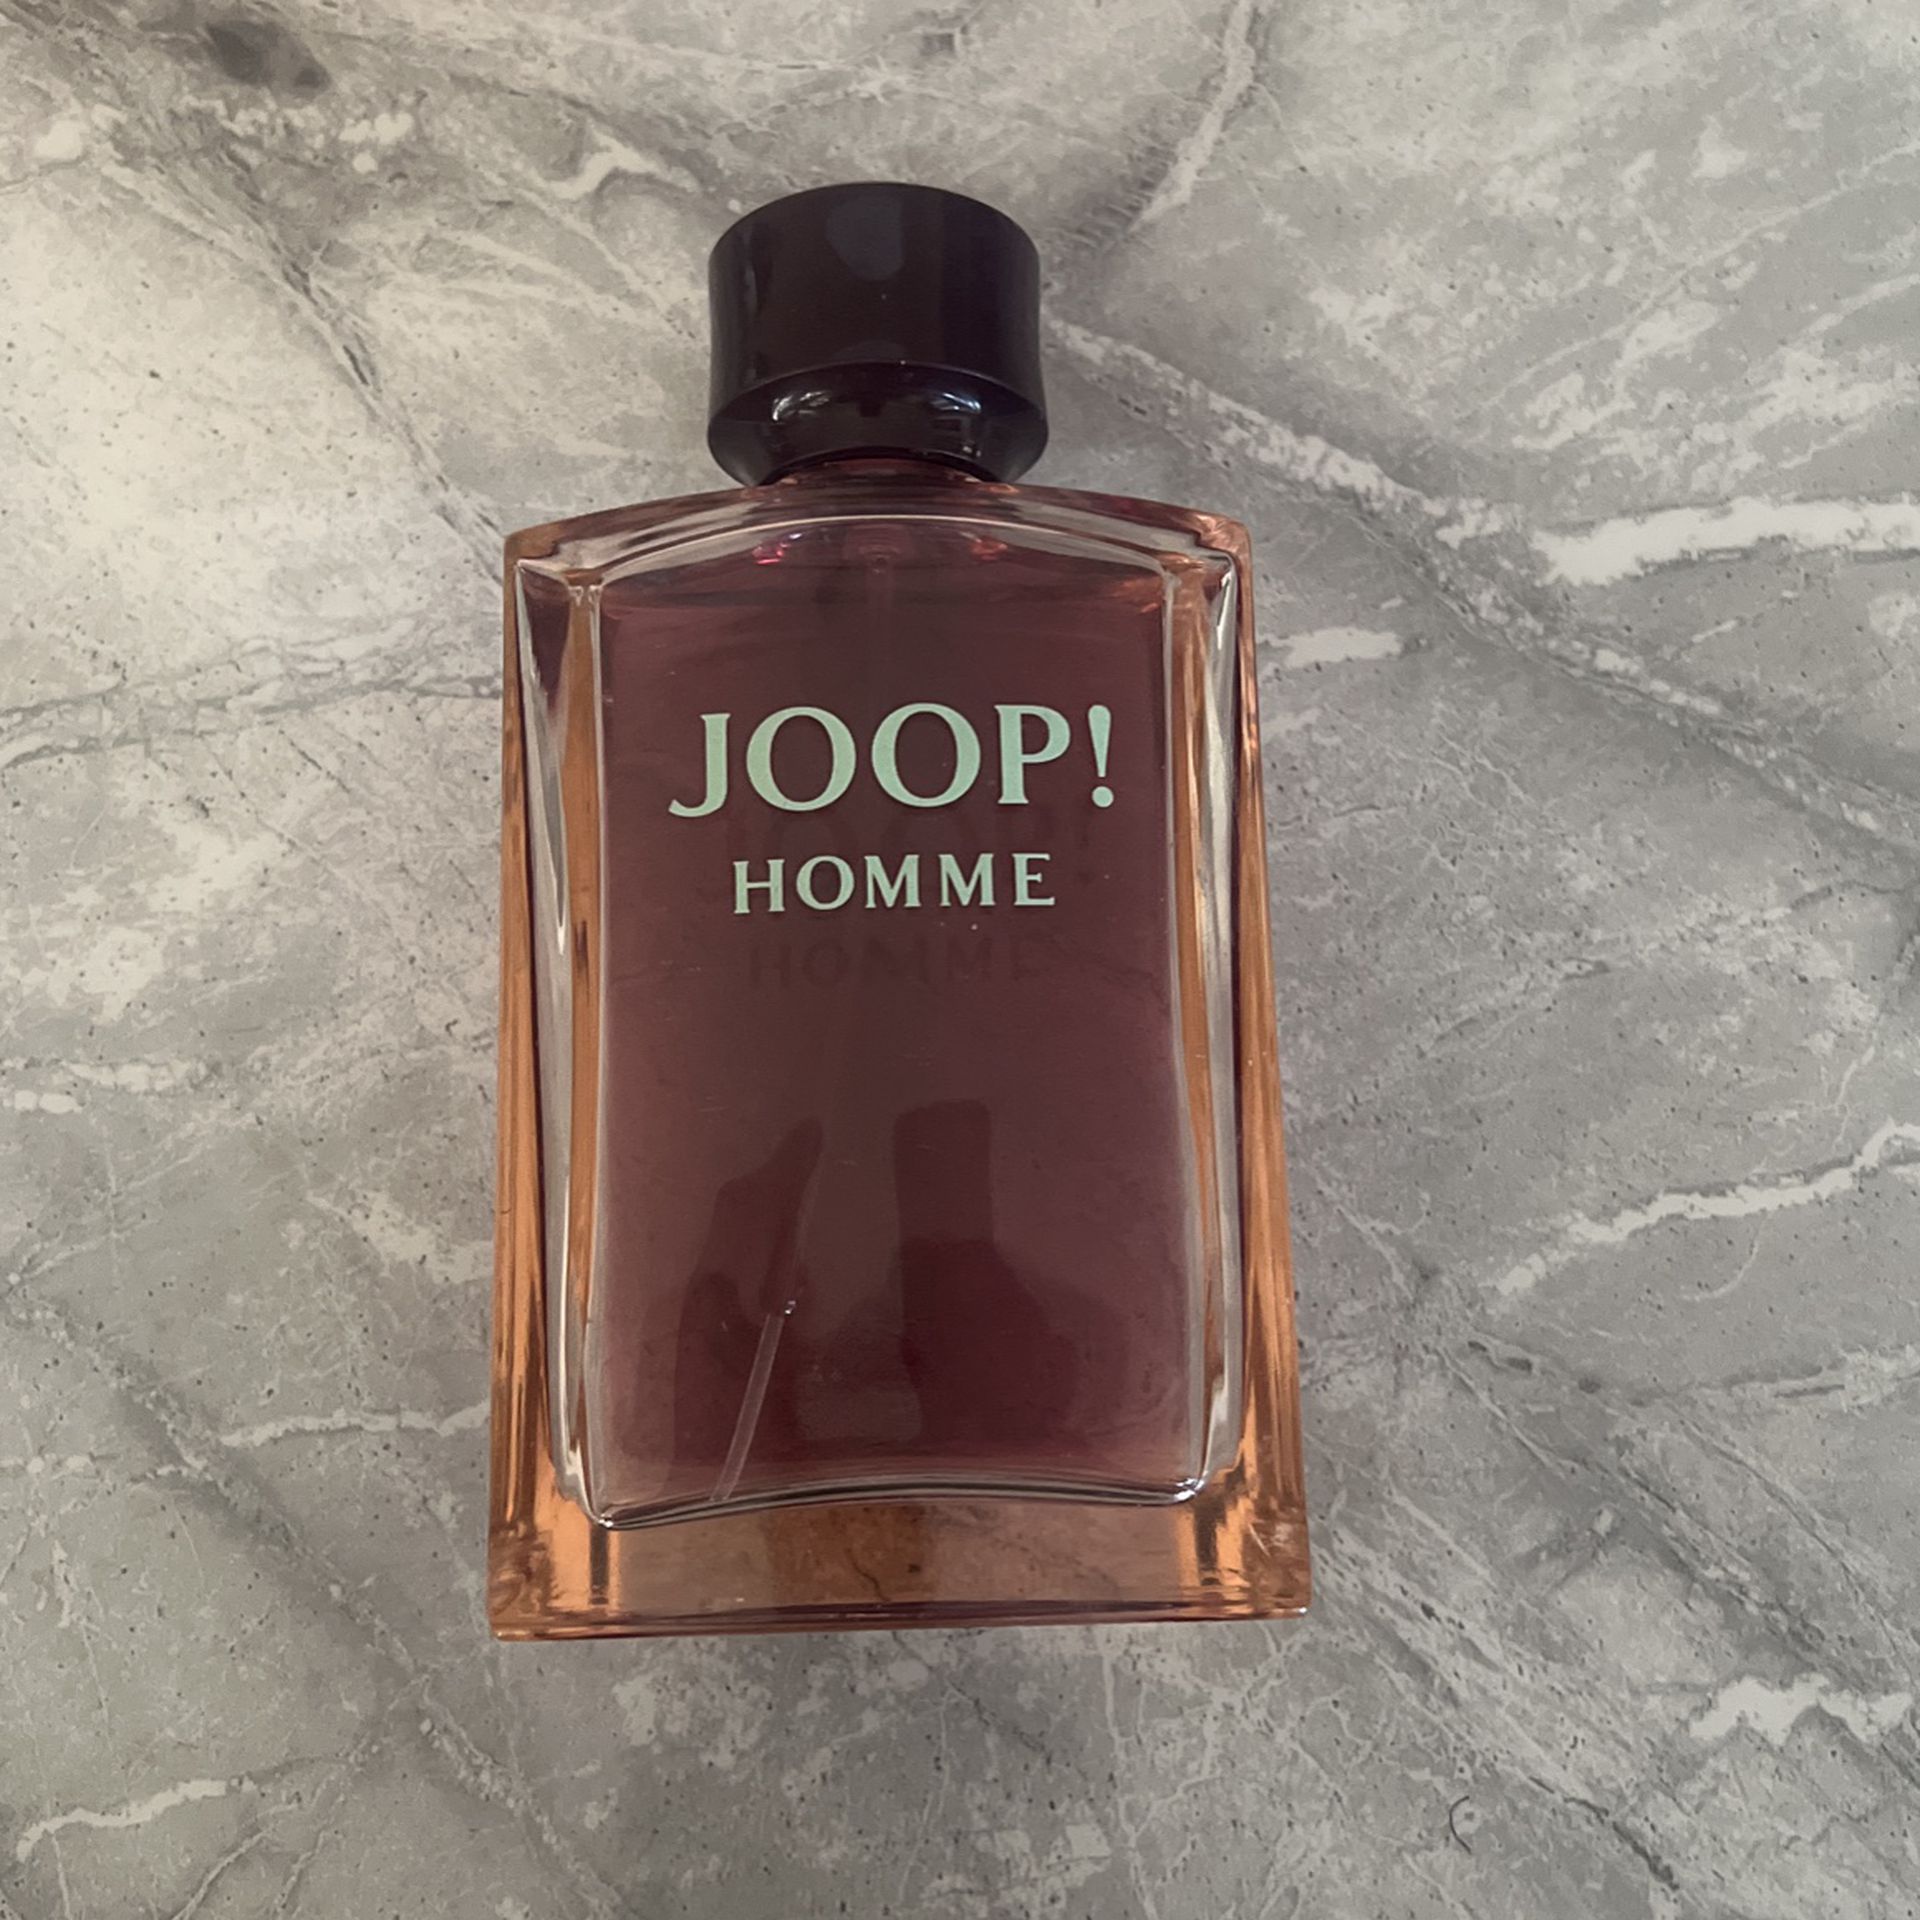 Joop Homme Cologne